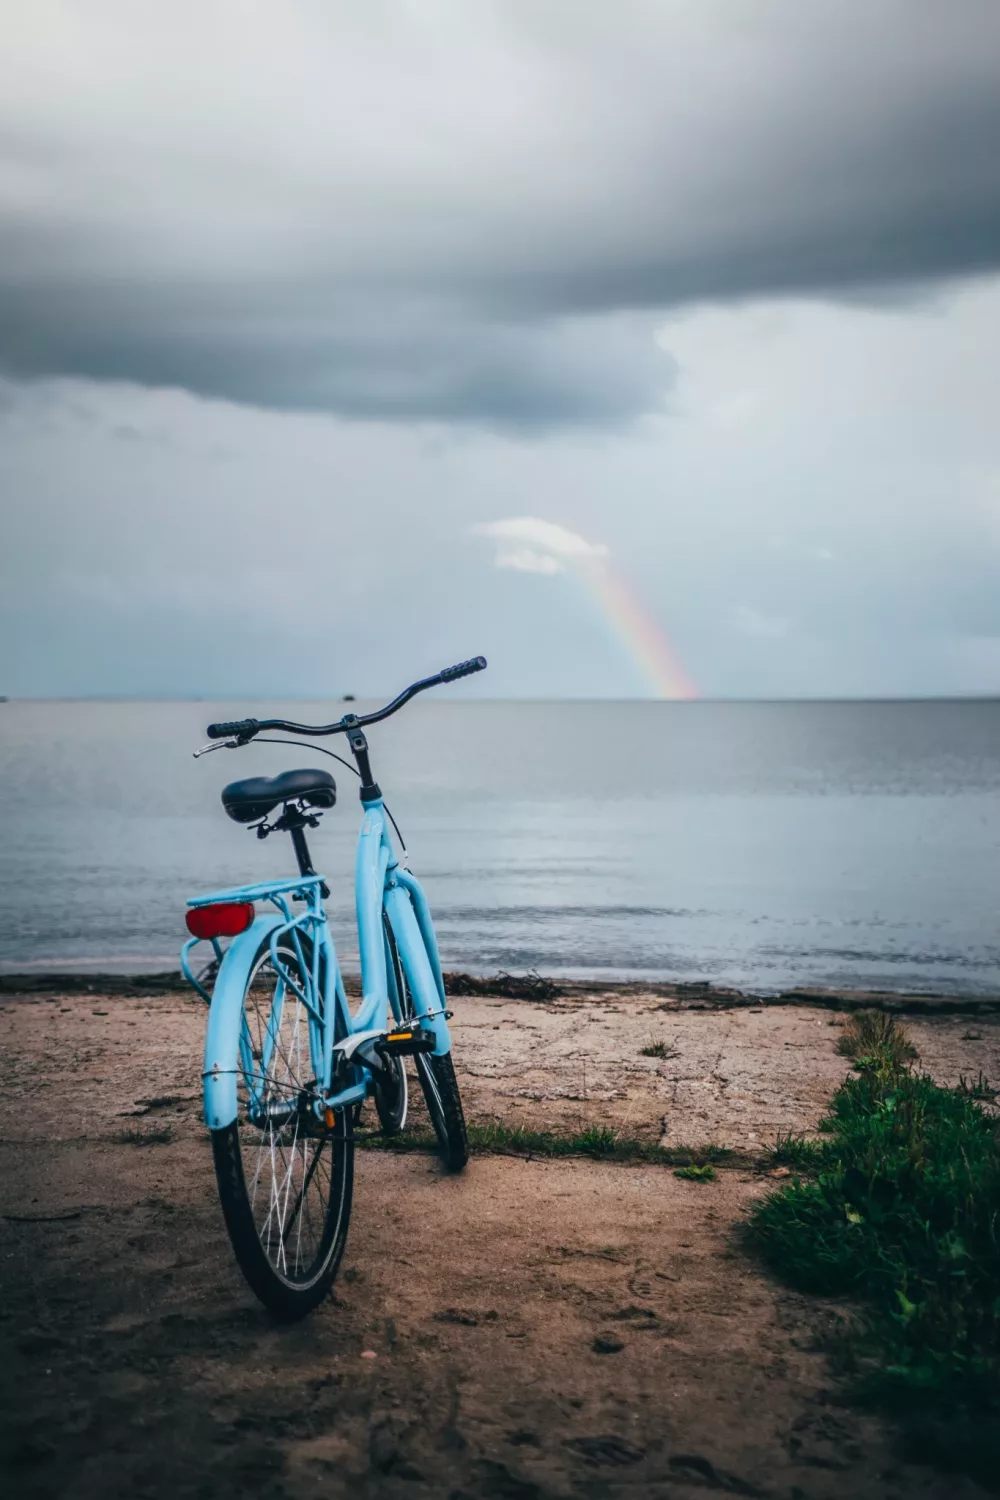 blue beach cruiser bike on the beach in front of a rainbow